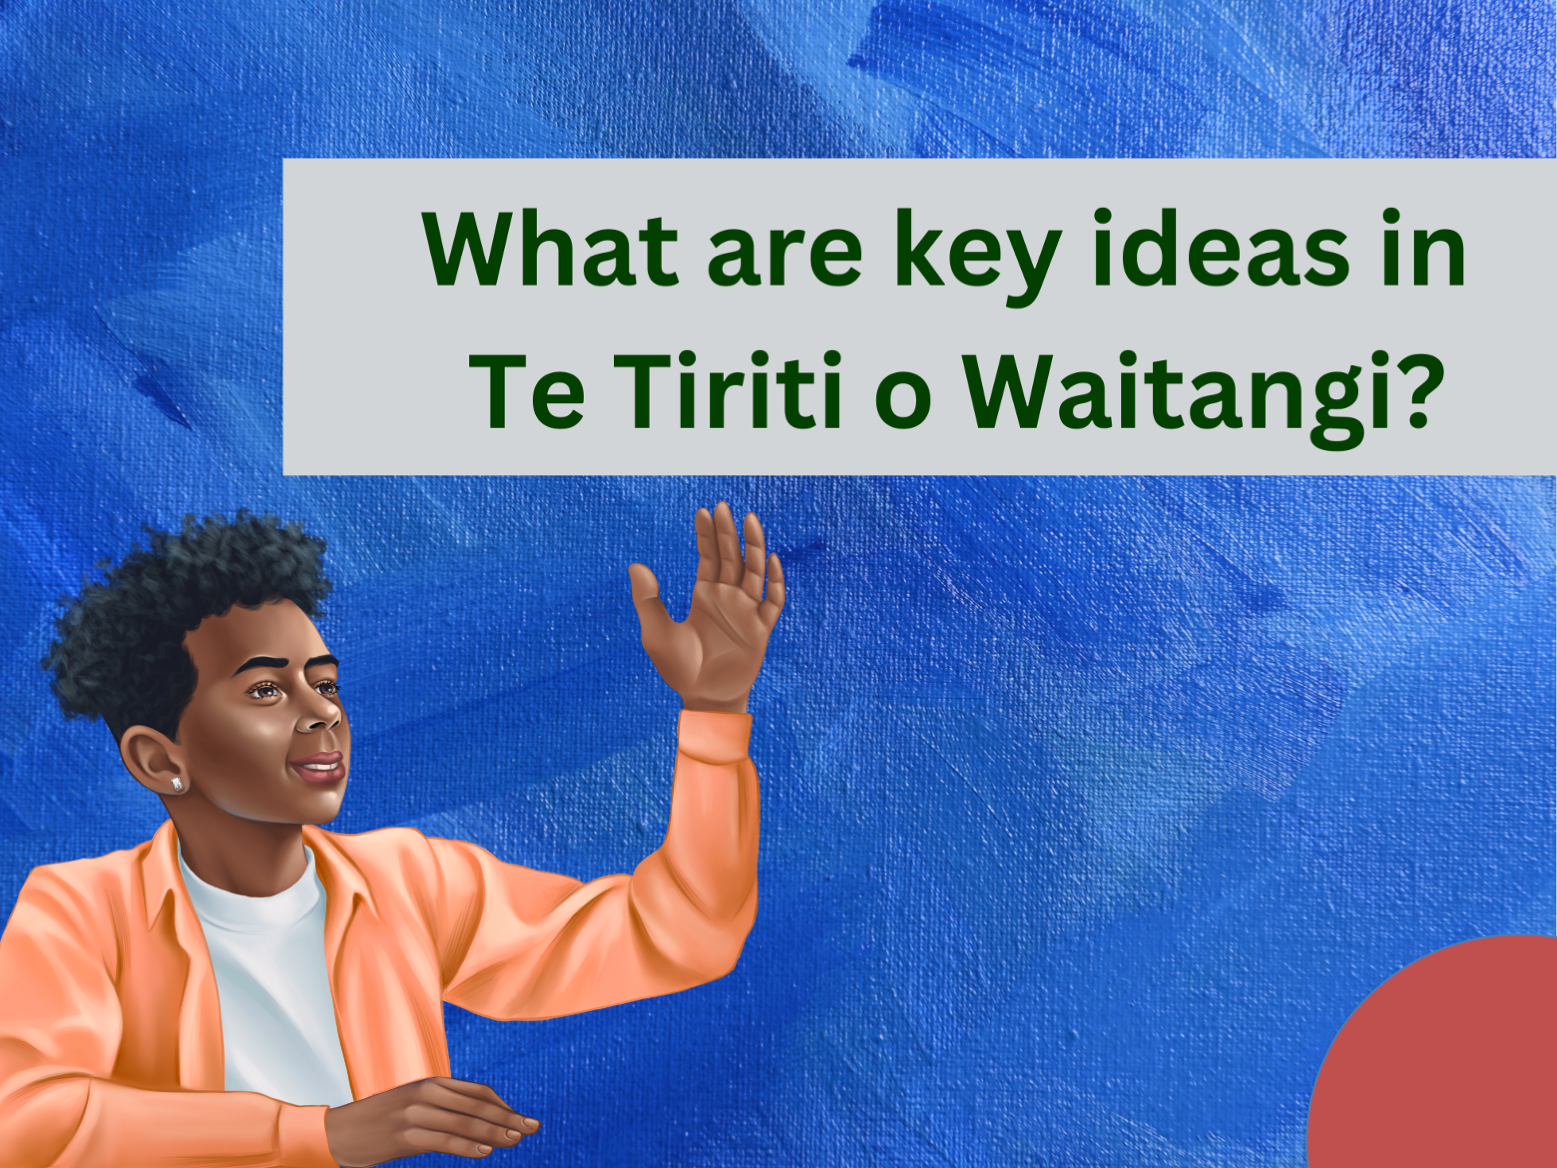 Treaty of Waitangi Principles posters - montessorikiwi